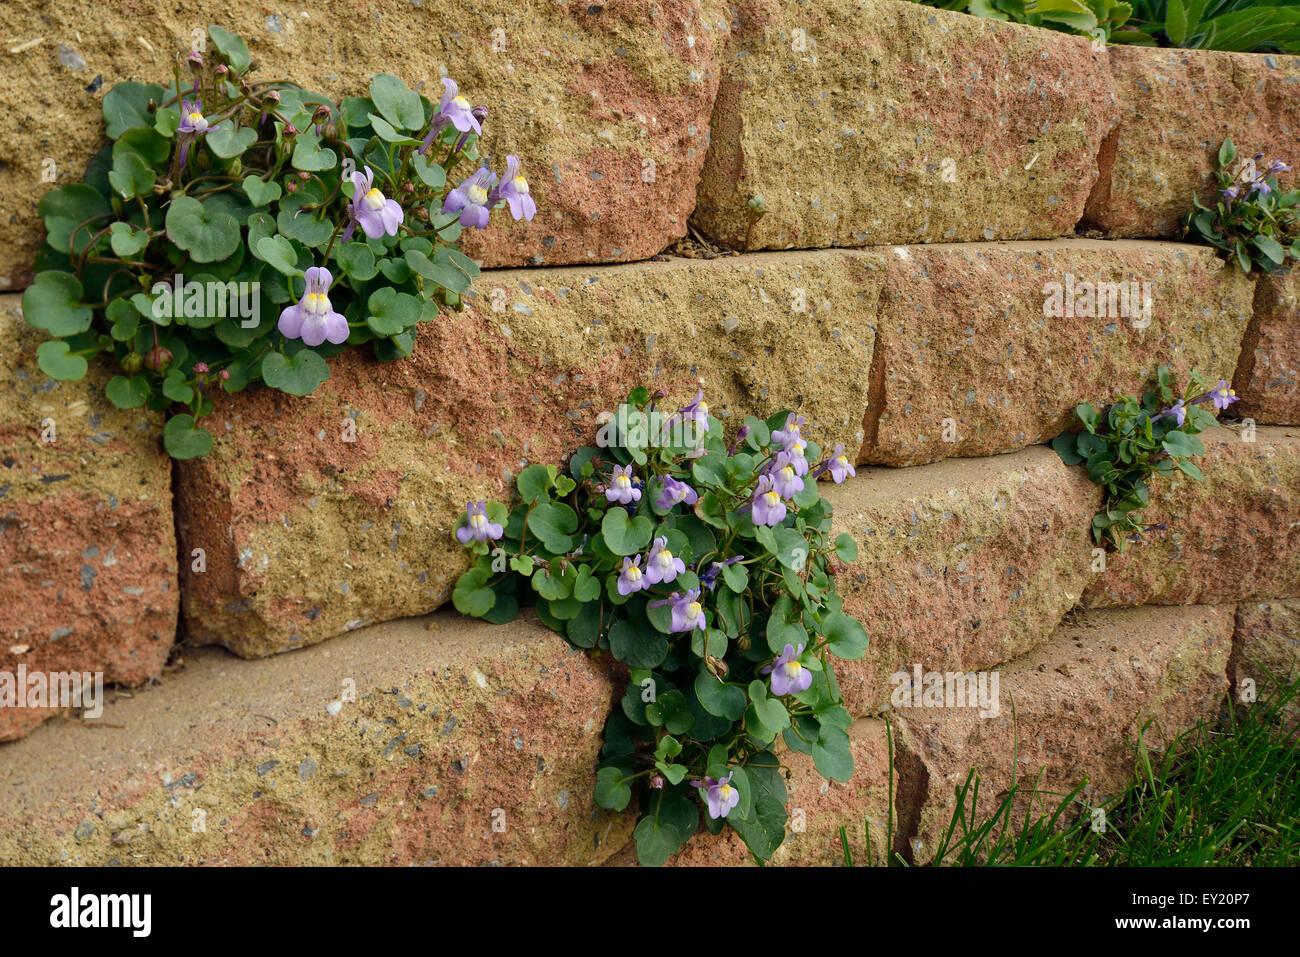 Ivy-Leaved Toadflax - Cymbalaria muralis on garden wall Stock Photo